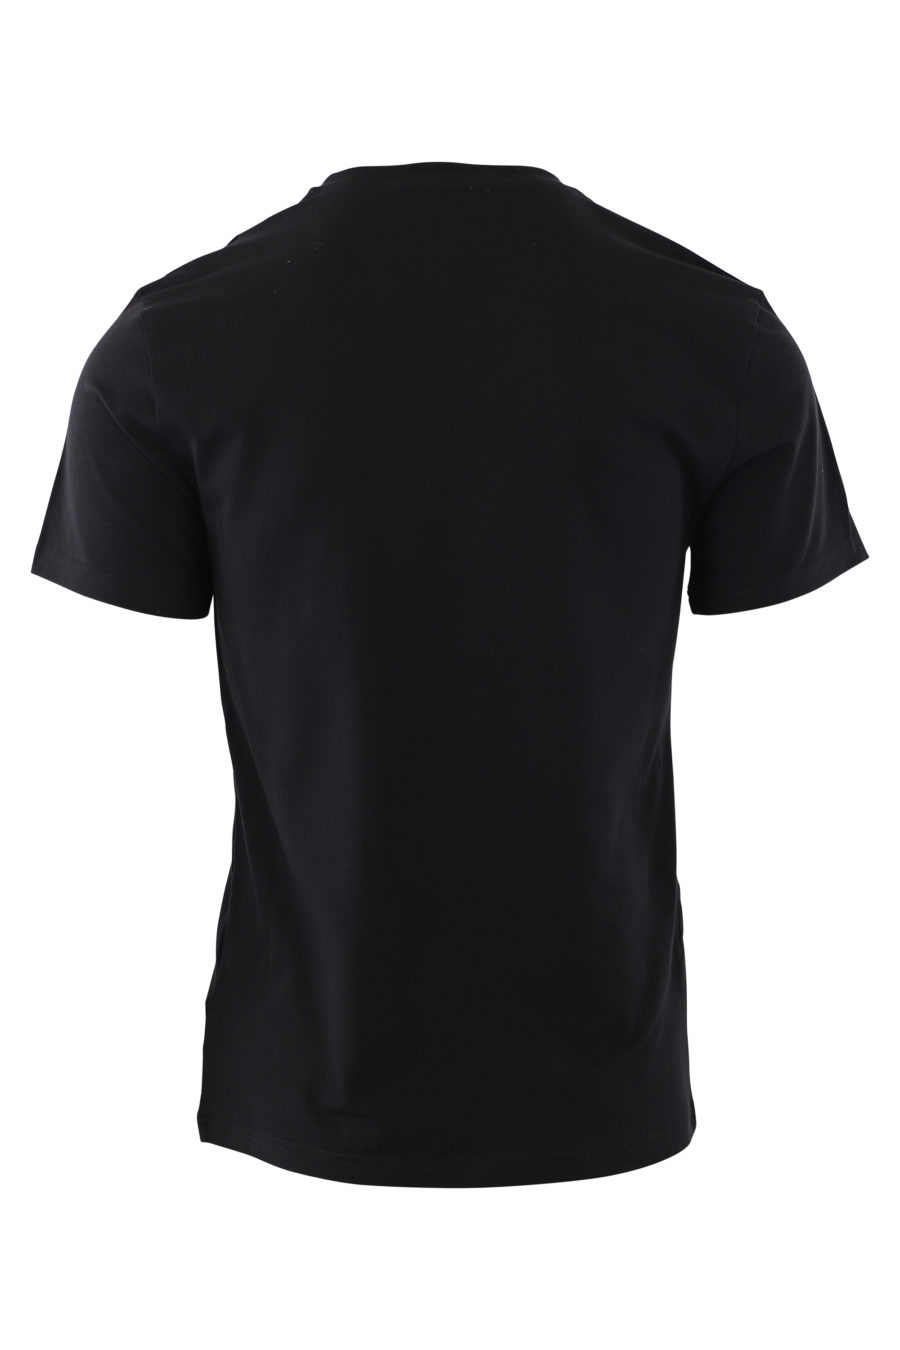 Camiseta negra logo grande parte delantera - IMG 2024